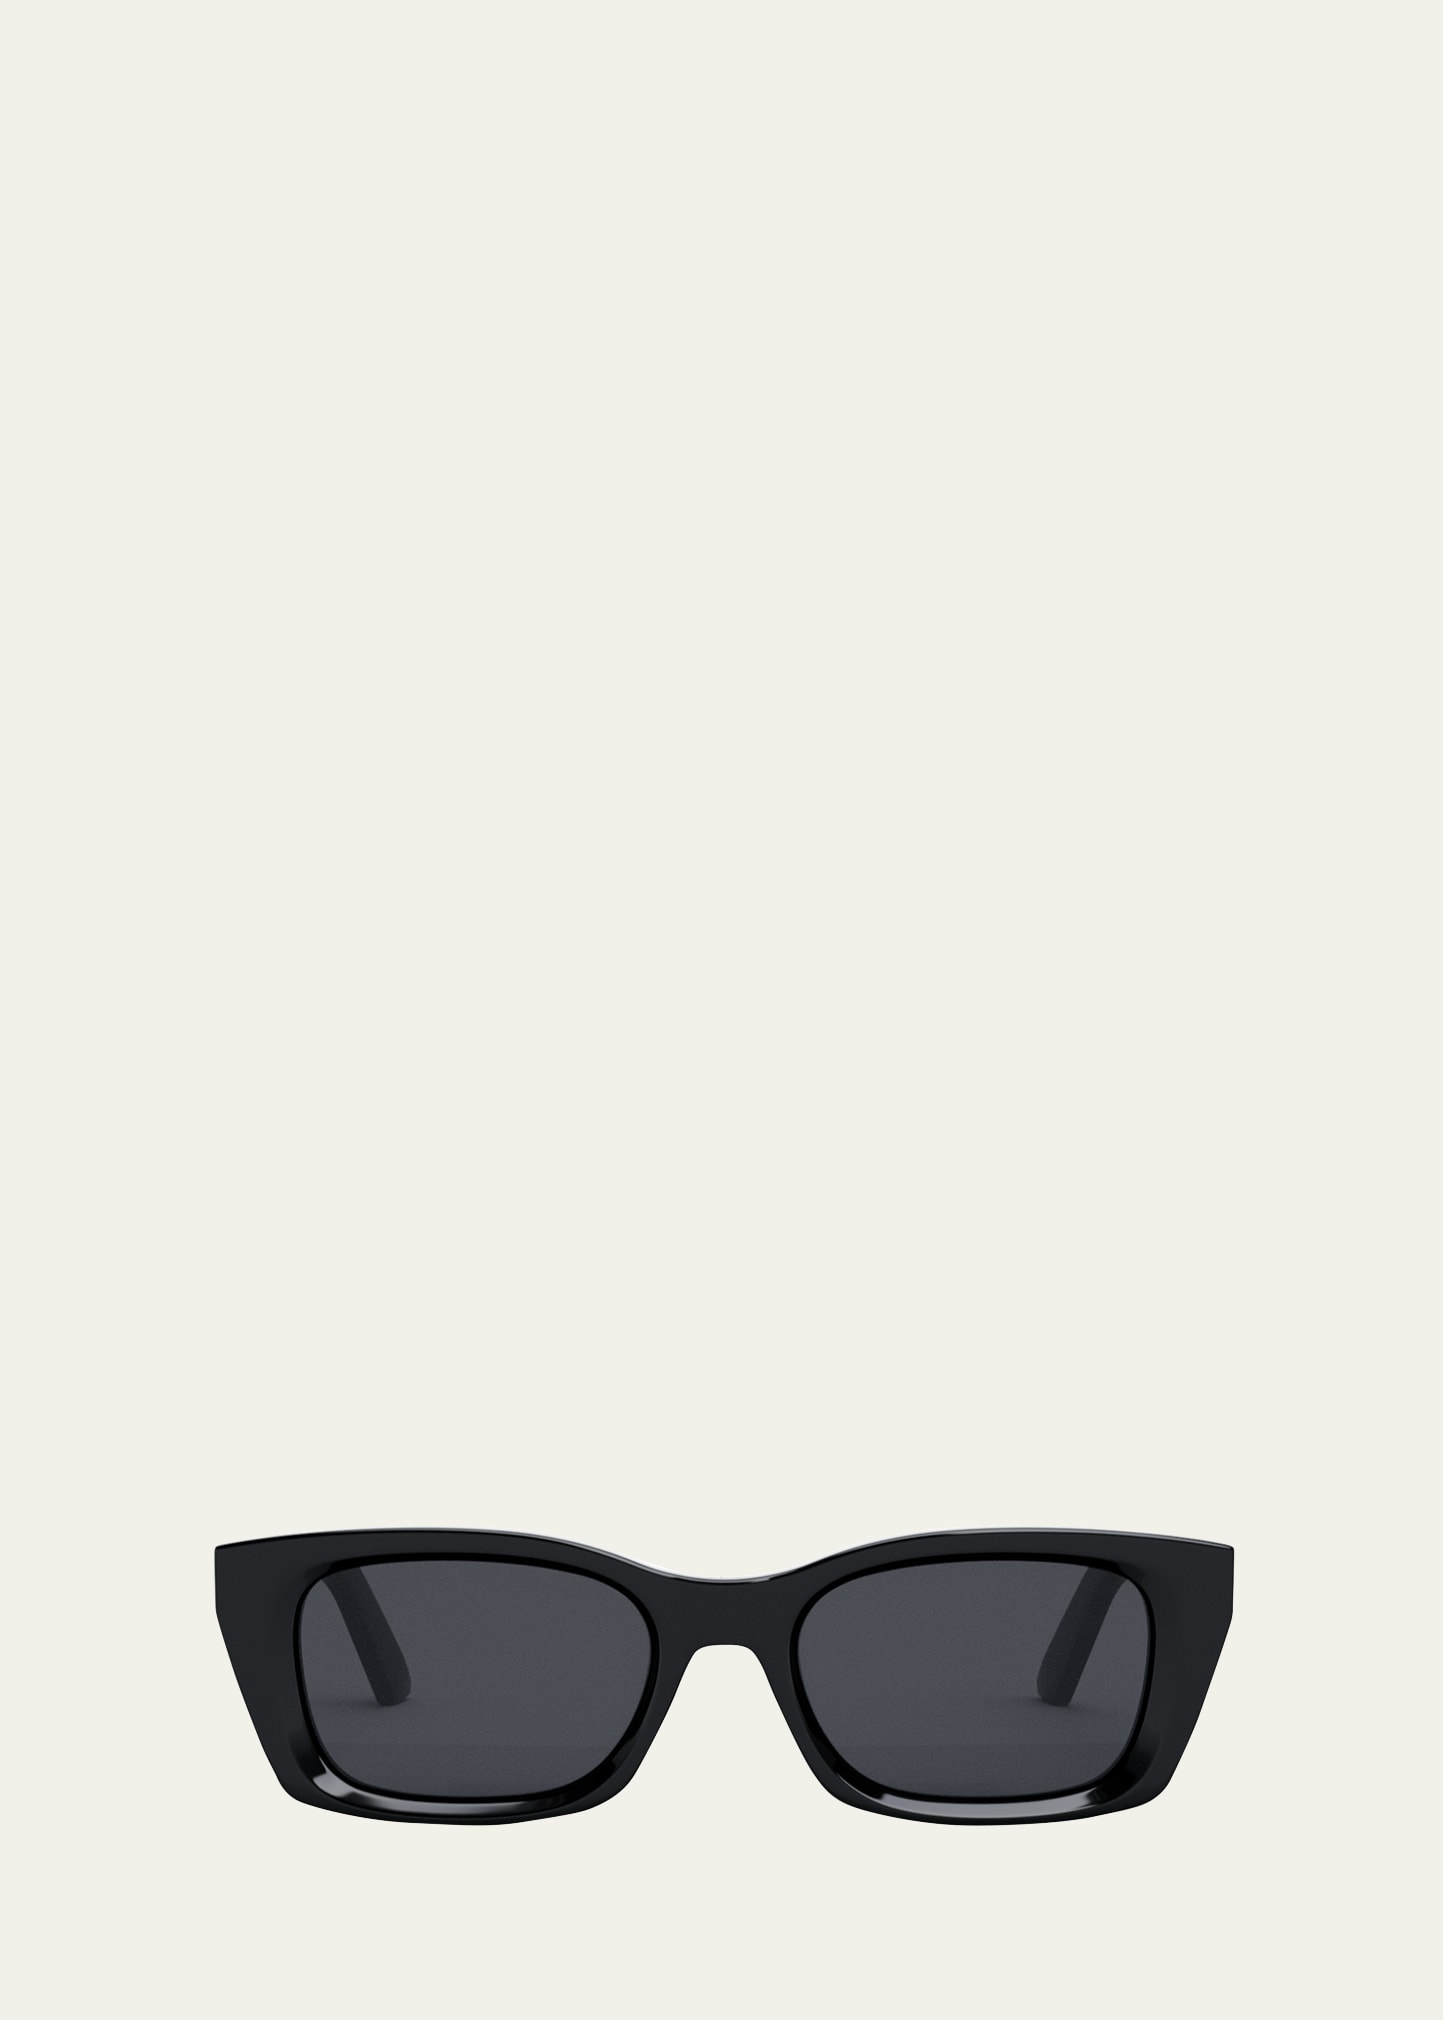 Dior Midnight S3i Sunglasses - Big Apple Buddy